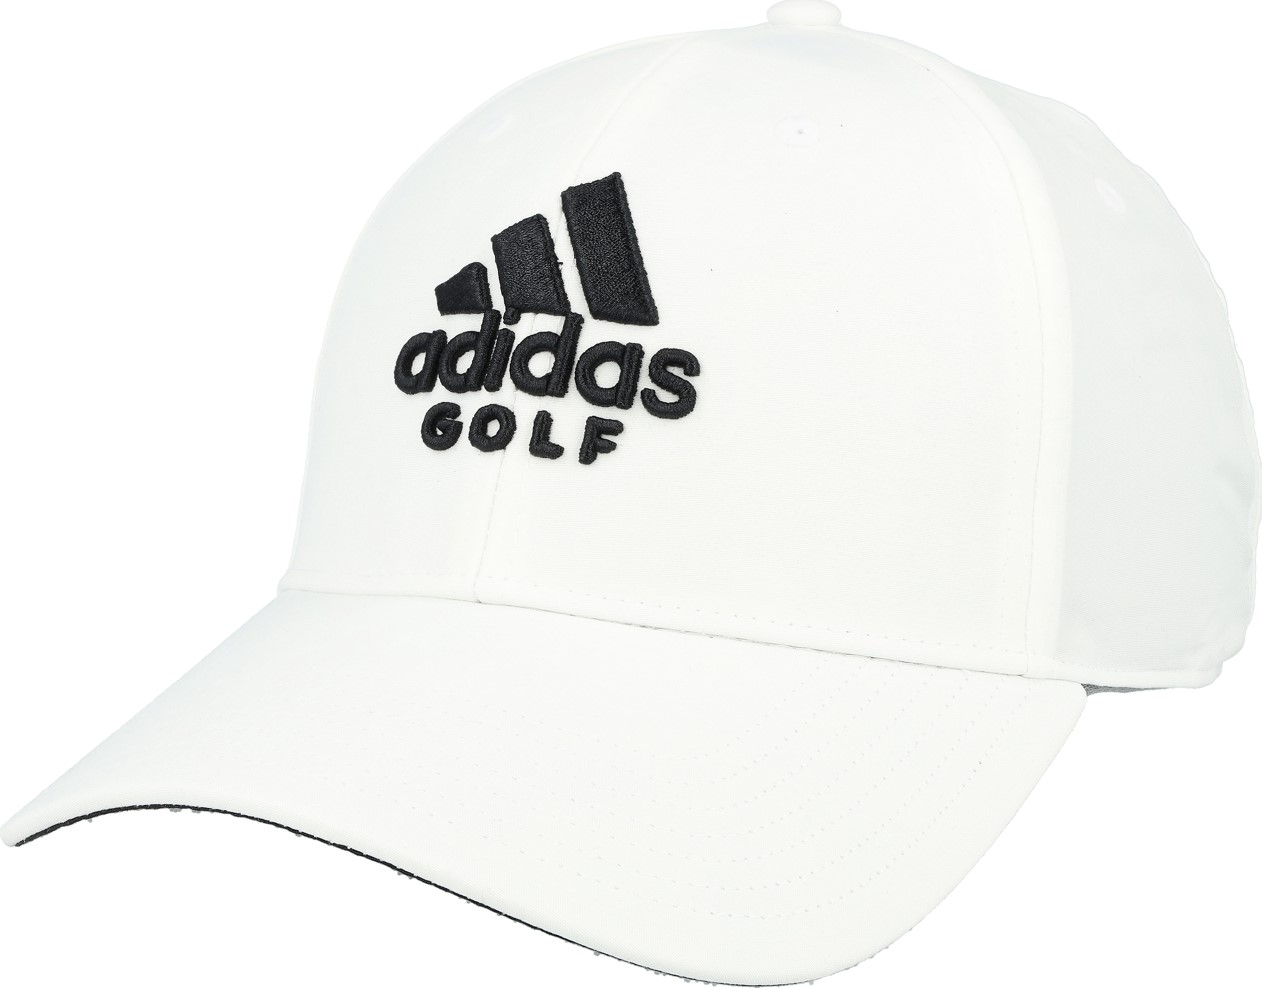 Adidas Golf Performance White Headwear Men Golf Hat - image 3 of 4